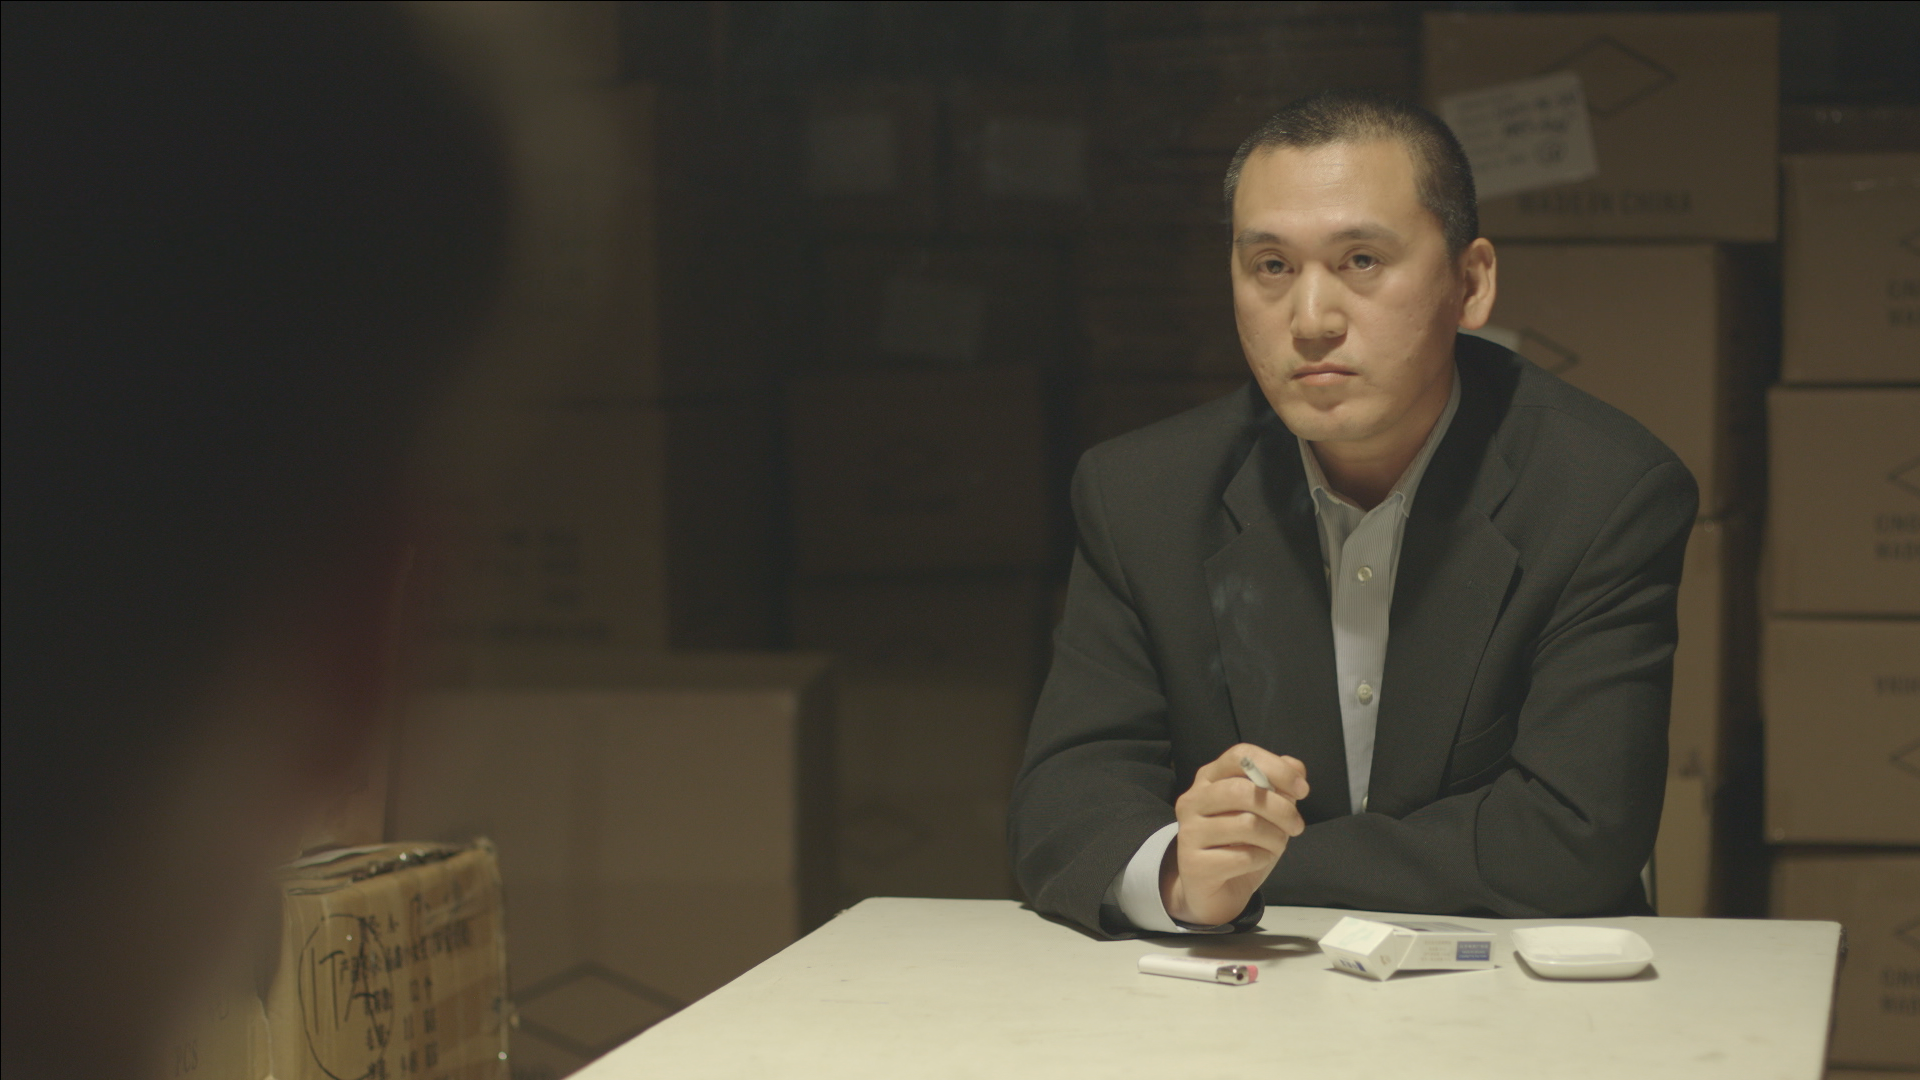 Cheng Interrogation Screenshot 1.png